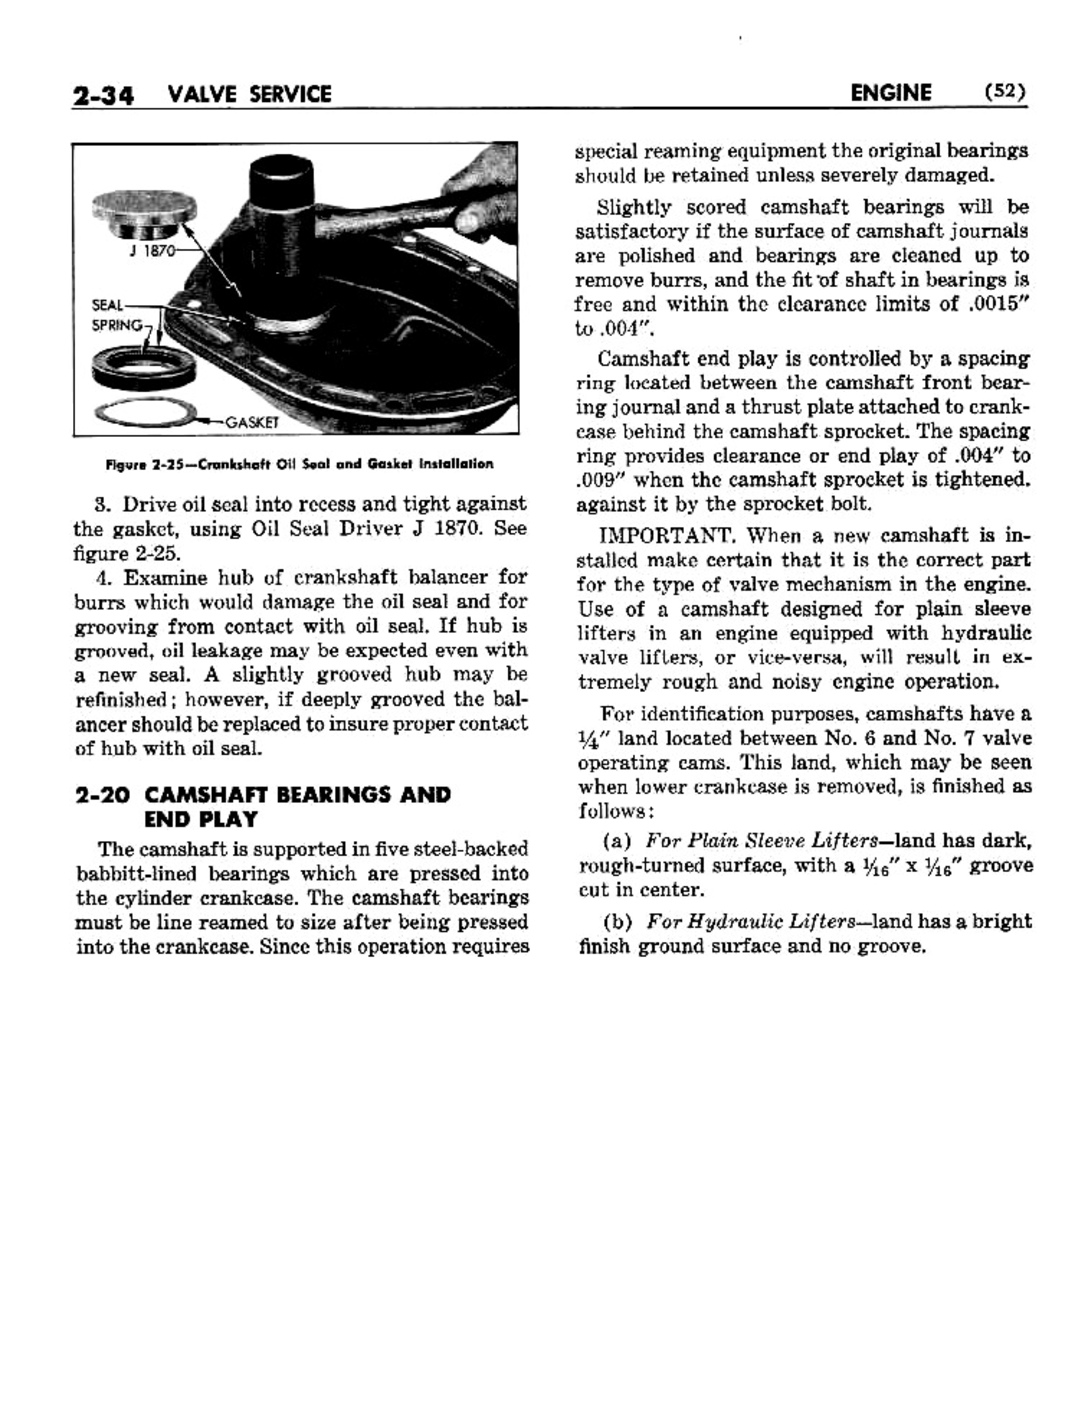 n_03 1952 Buick Shop Manual - Engine-034-034.jpg